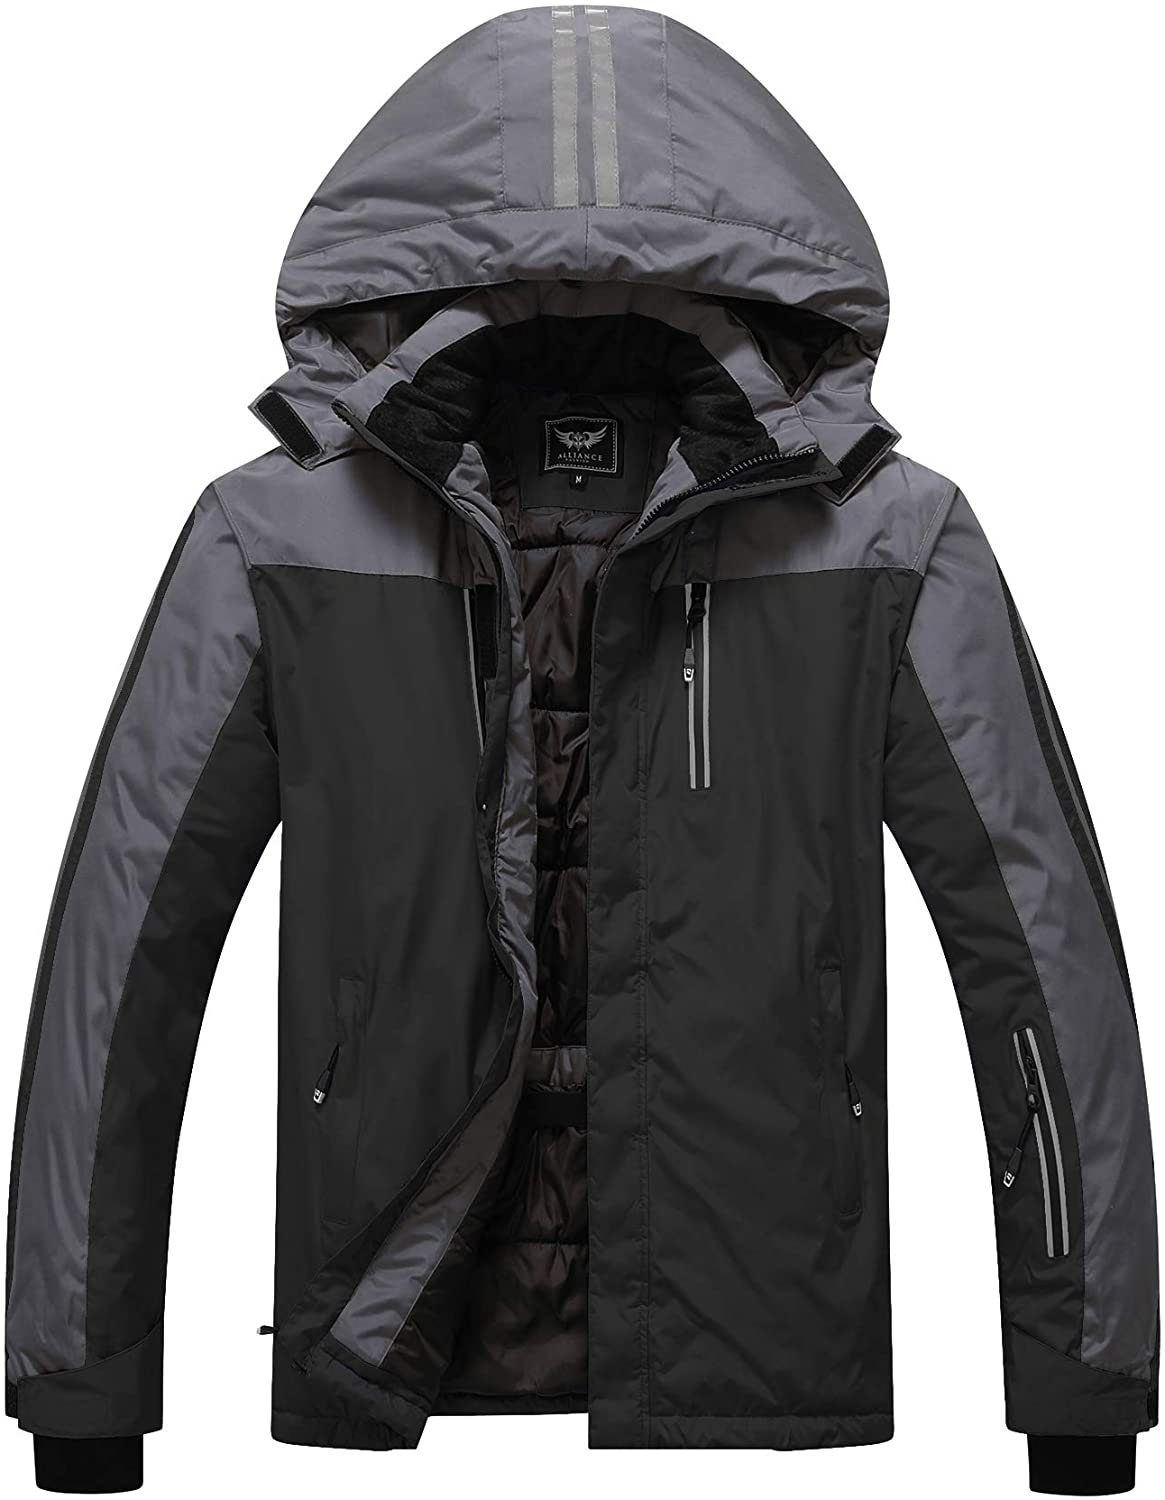 Men's Mountain Waterproof Ski Jacket Windproof Rain Jacket Winter Warm Snow Coat with Removable Hooded 